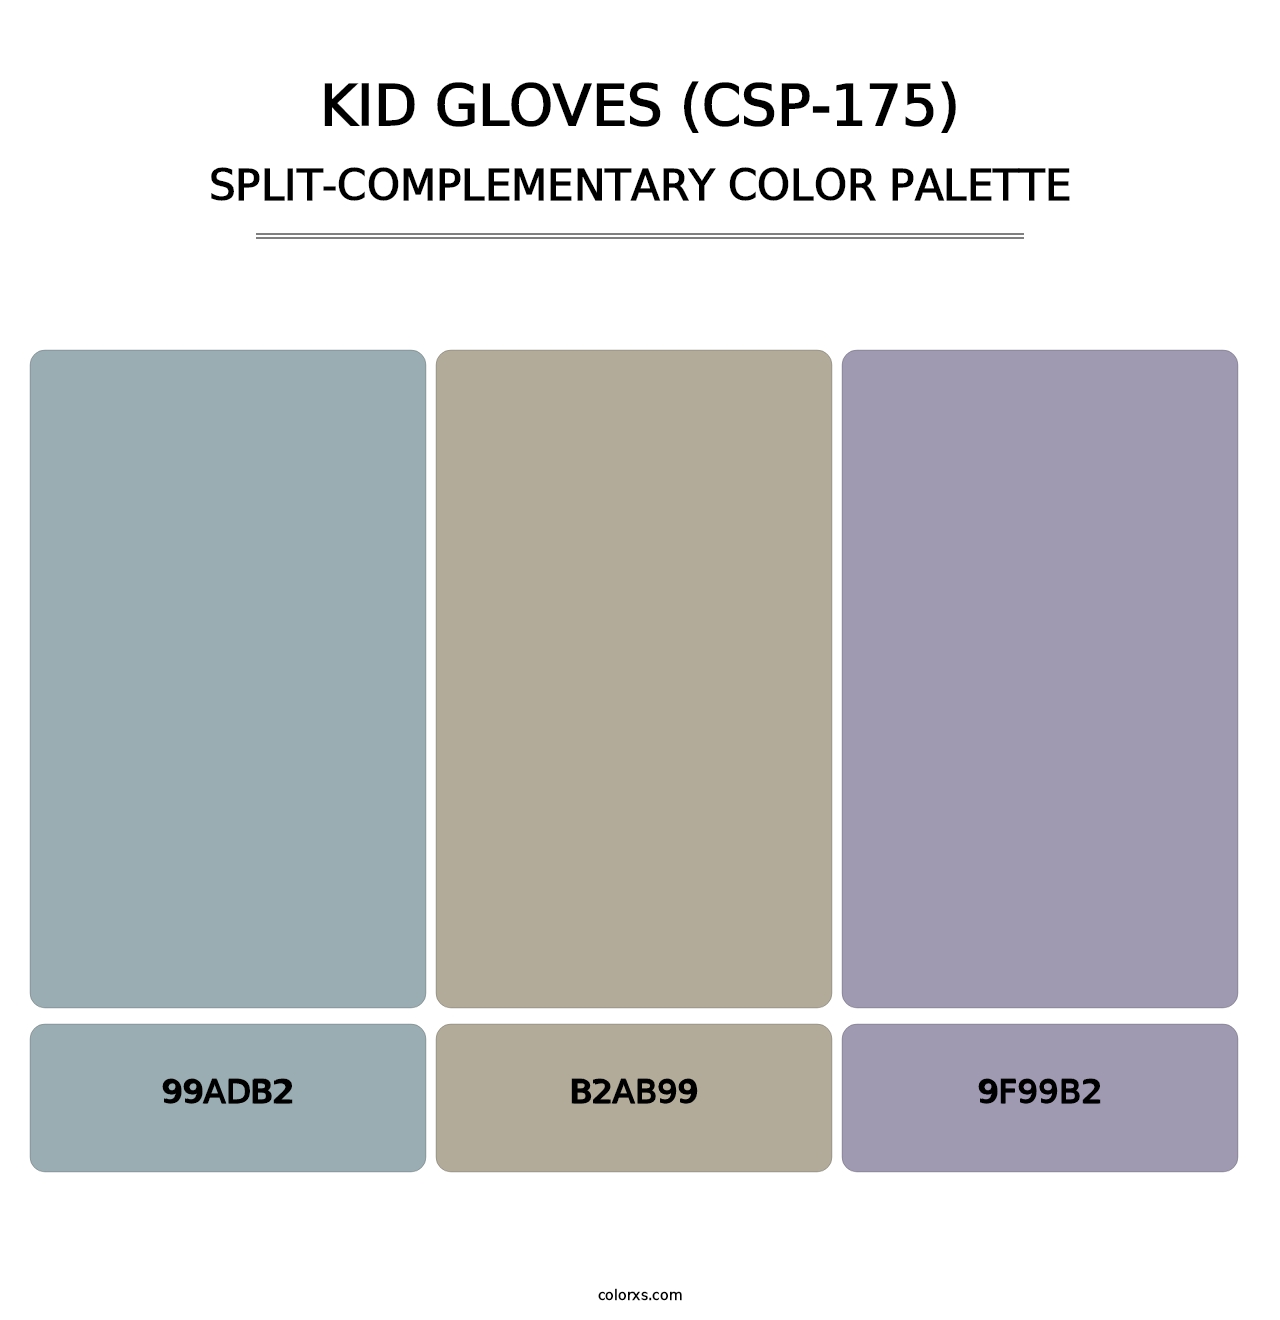 Kid Gloves (CSP-175) - Split-Complementary Color Palette